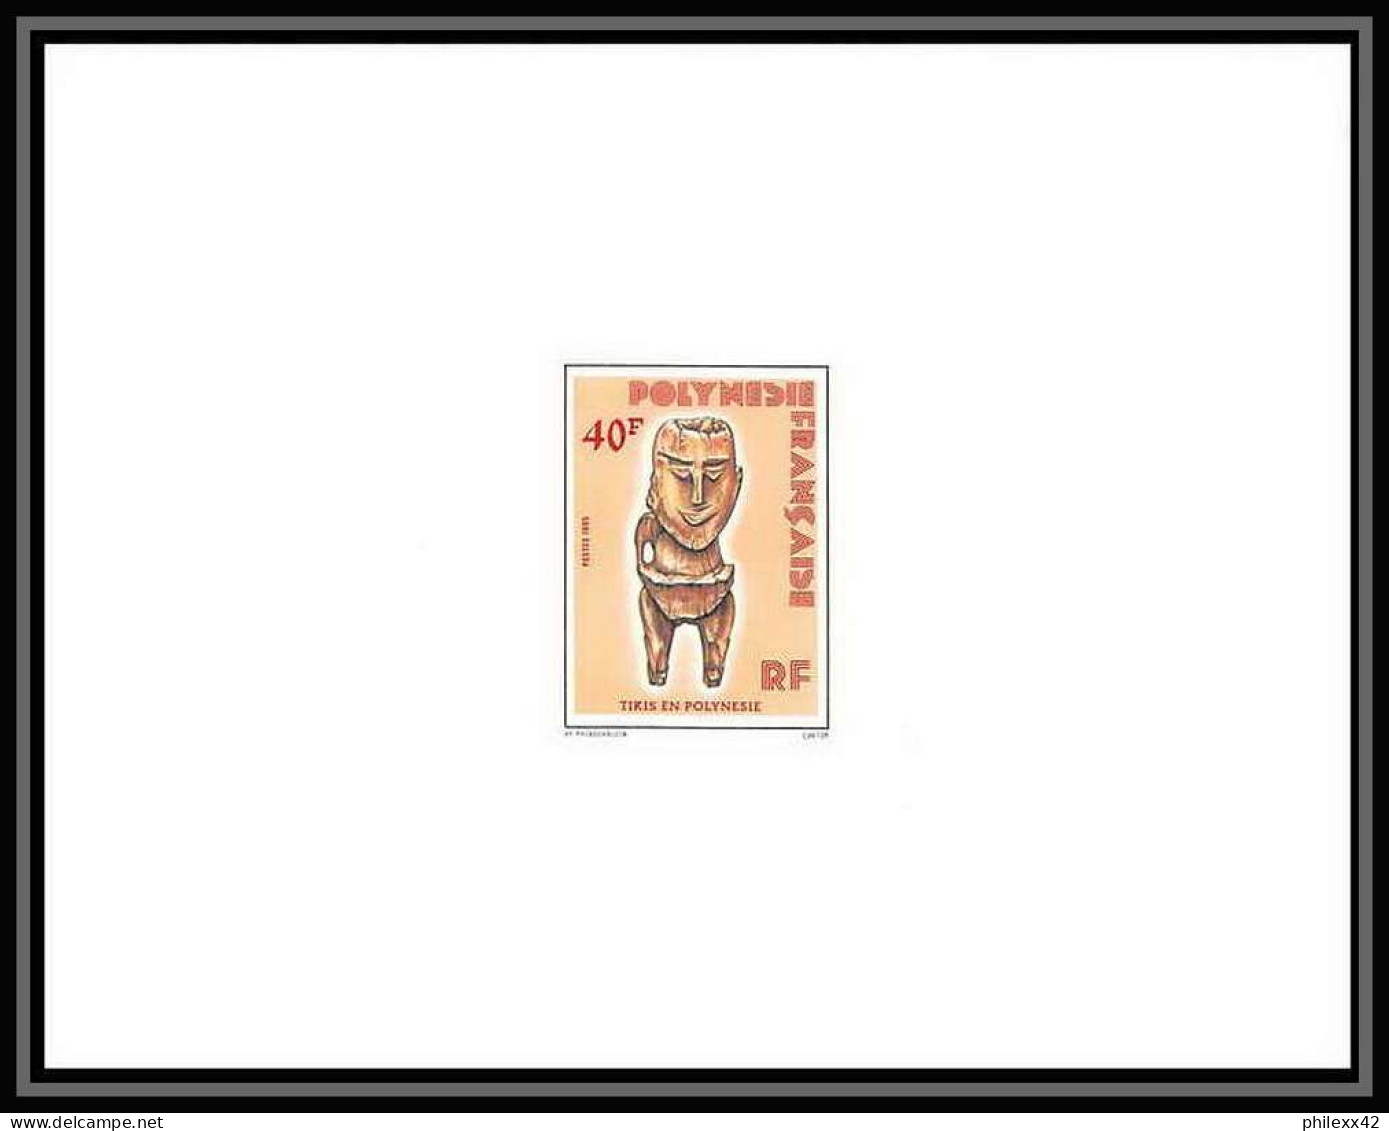 1722 épreuve De Luxe / Deluxe Proof Polynésie (Polynesia) N° 227/229 Tikis En Polynésie Statue Statuette + Fdc - Imperforates, Proofs & Errors